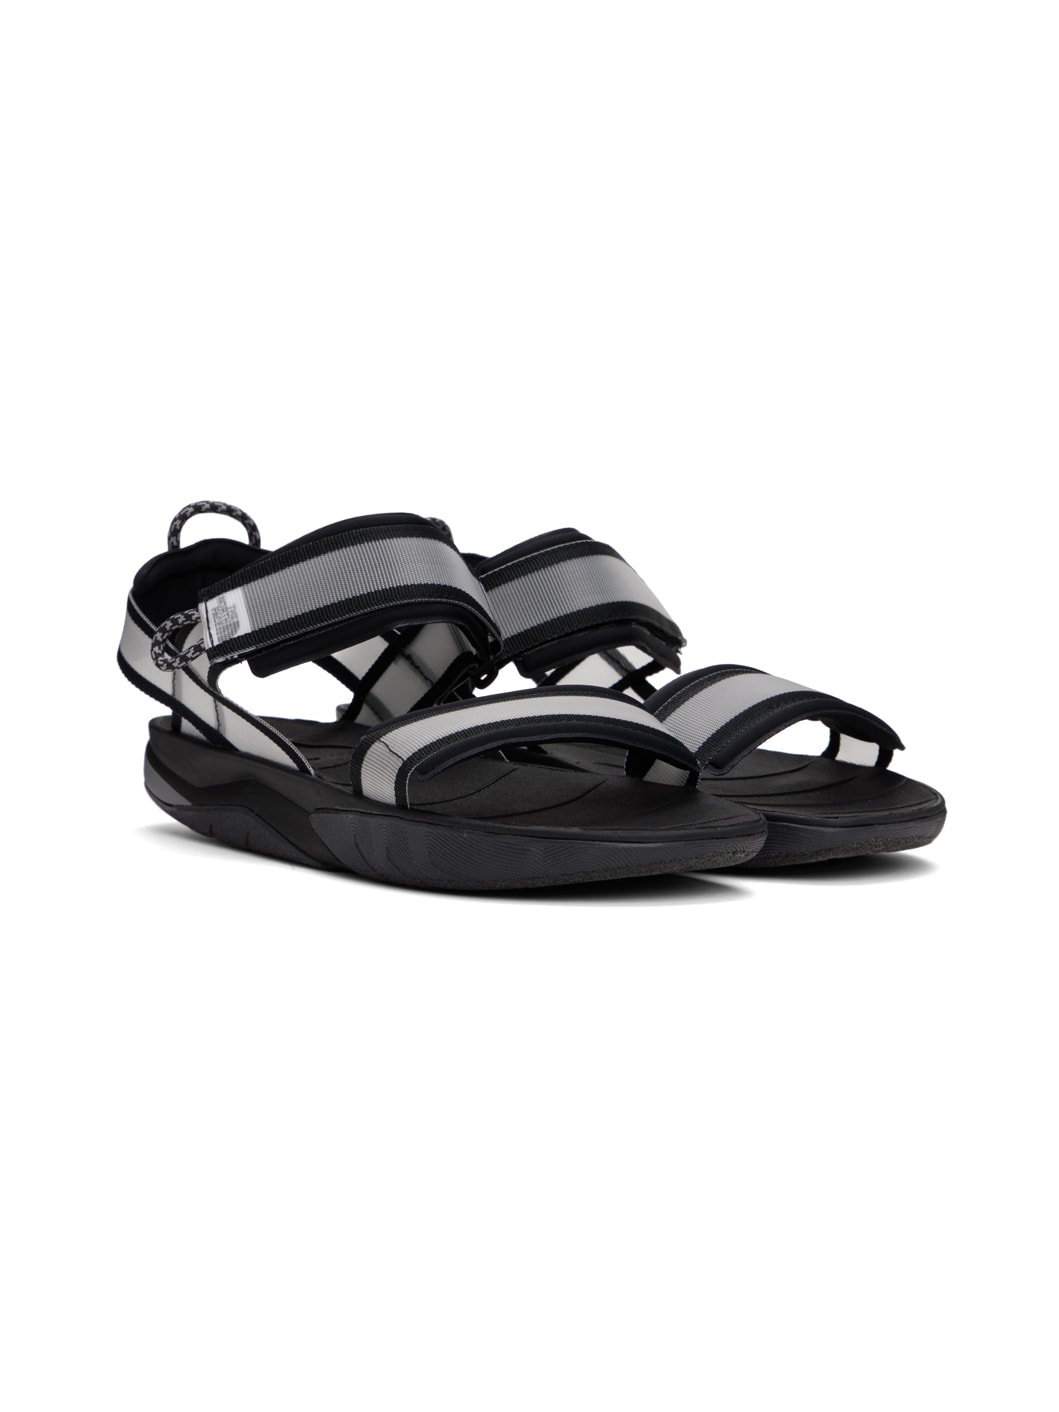 Gray & Black Skeena Sandals - 4